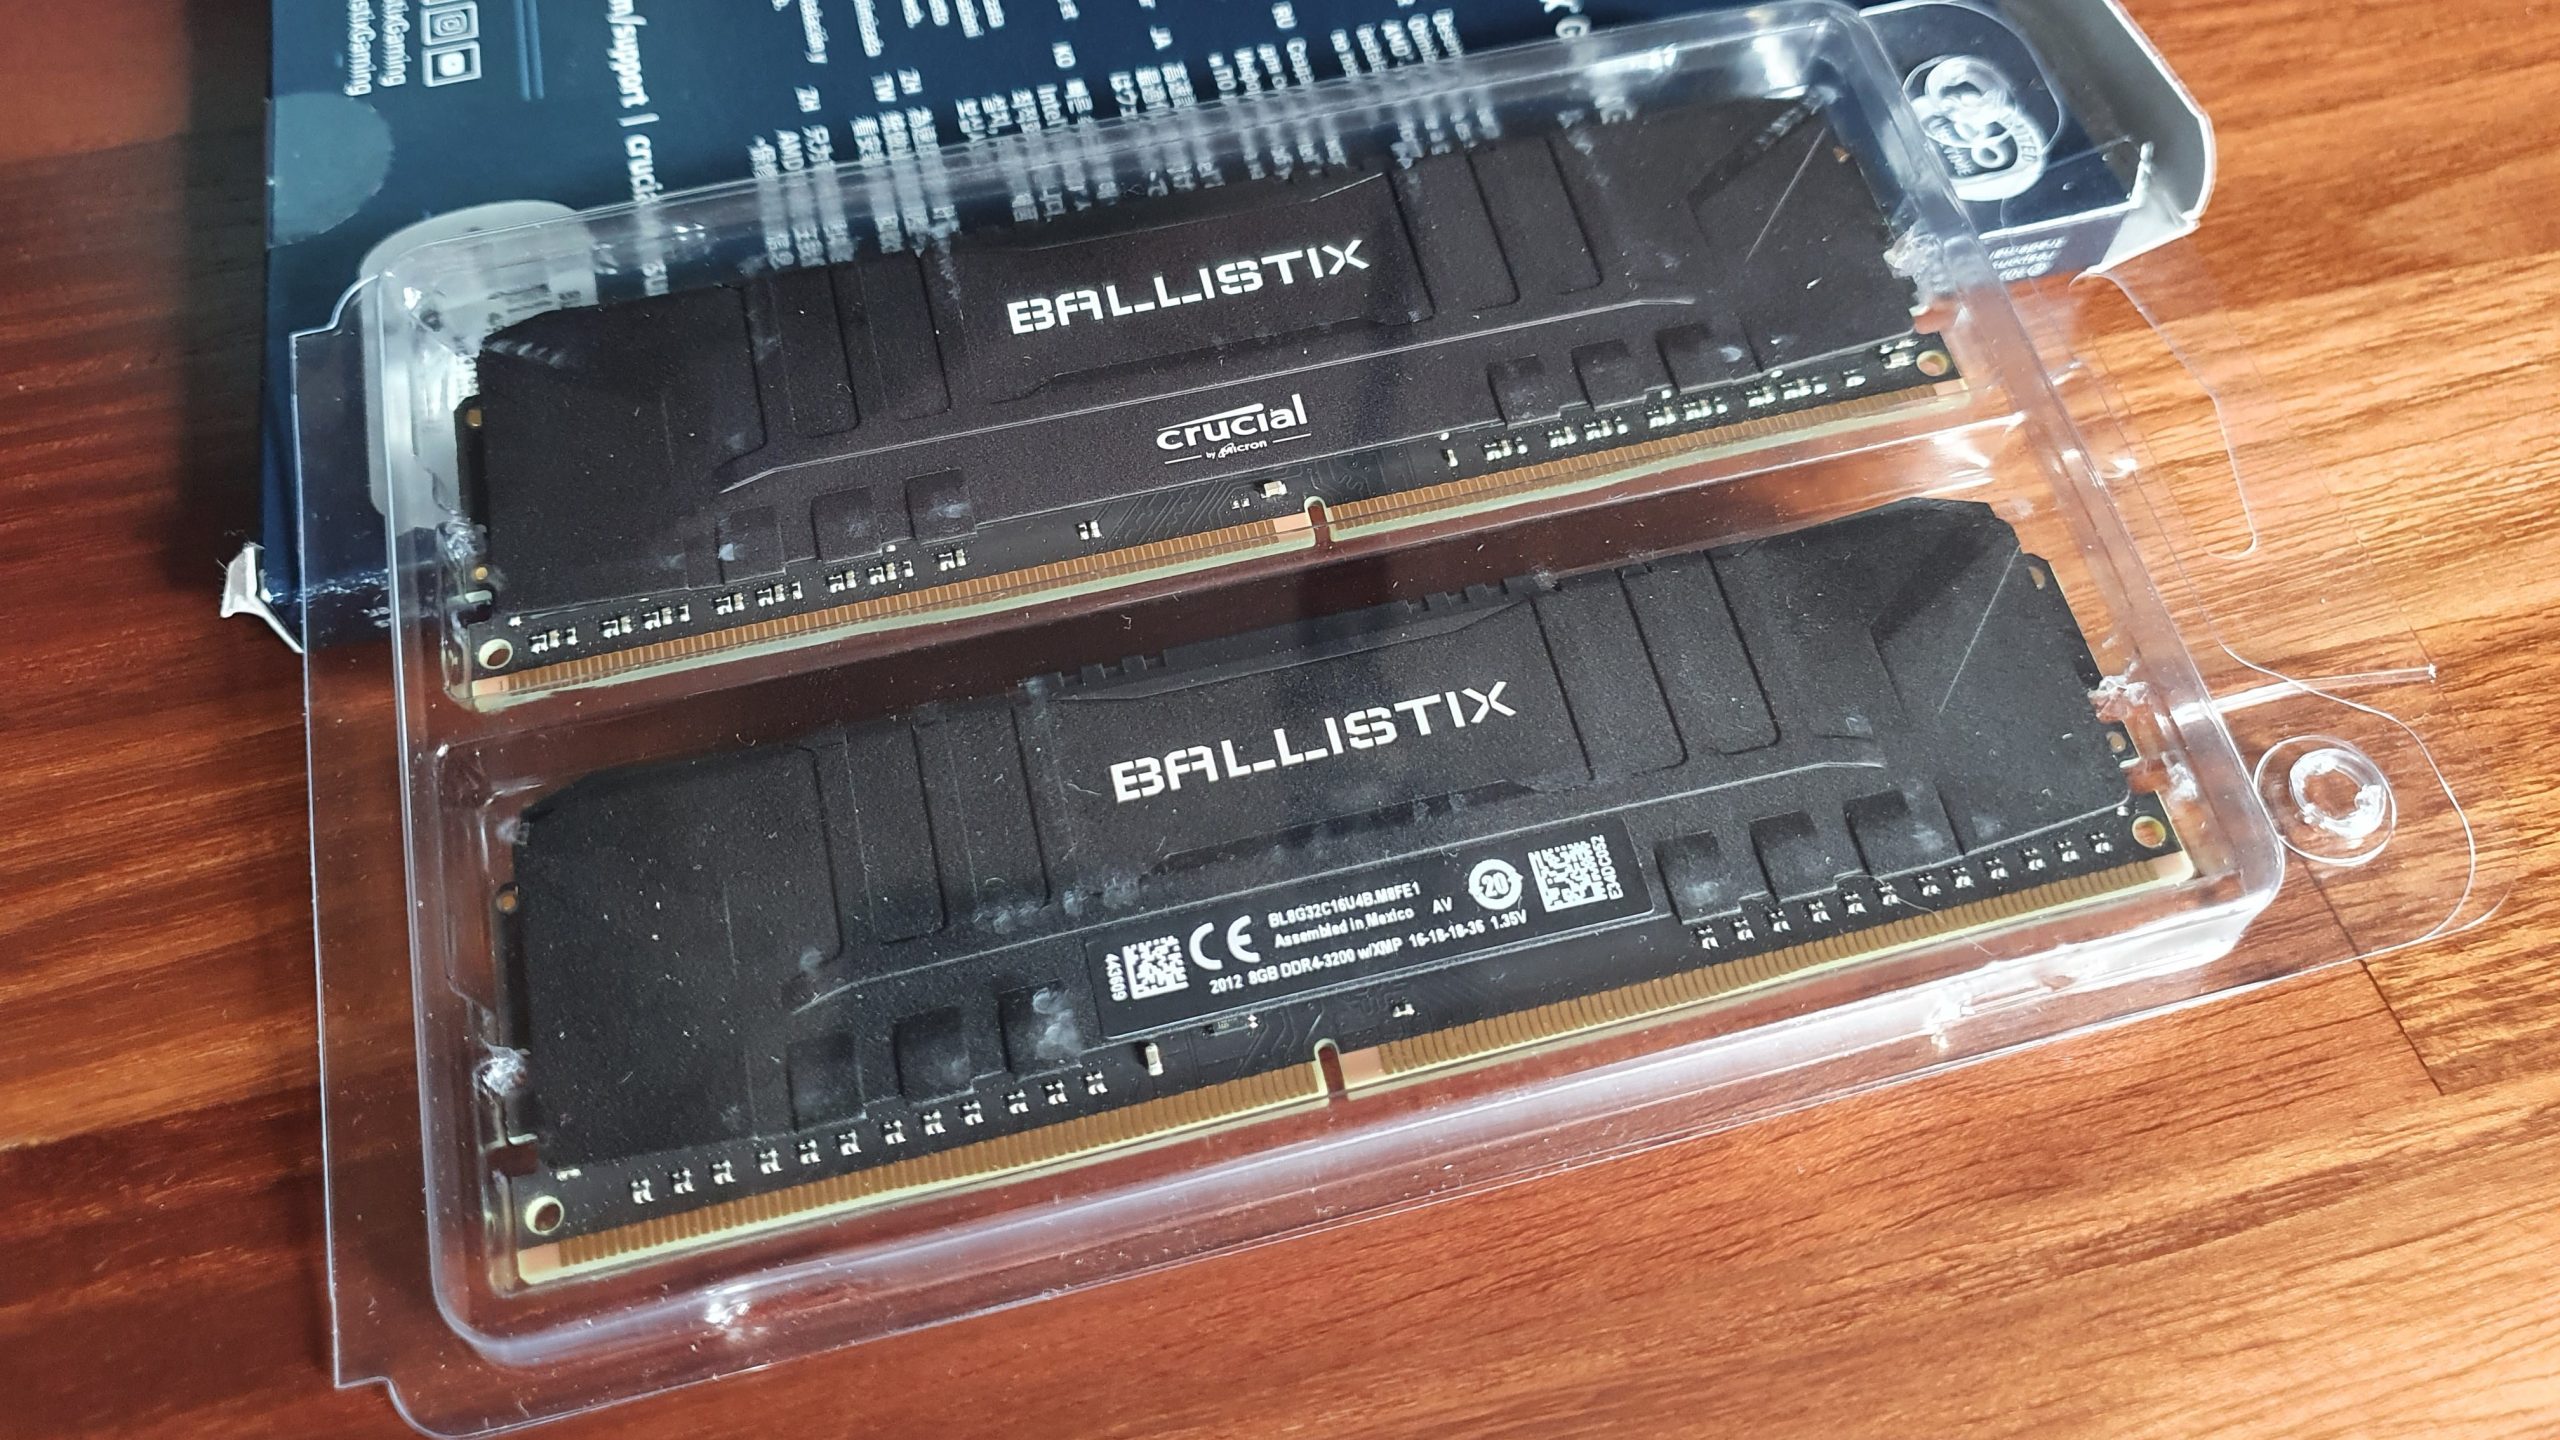 Crucial Ballistix Gaming DDR4 3200 MHz (4x 16GB) review